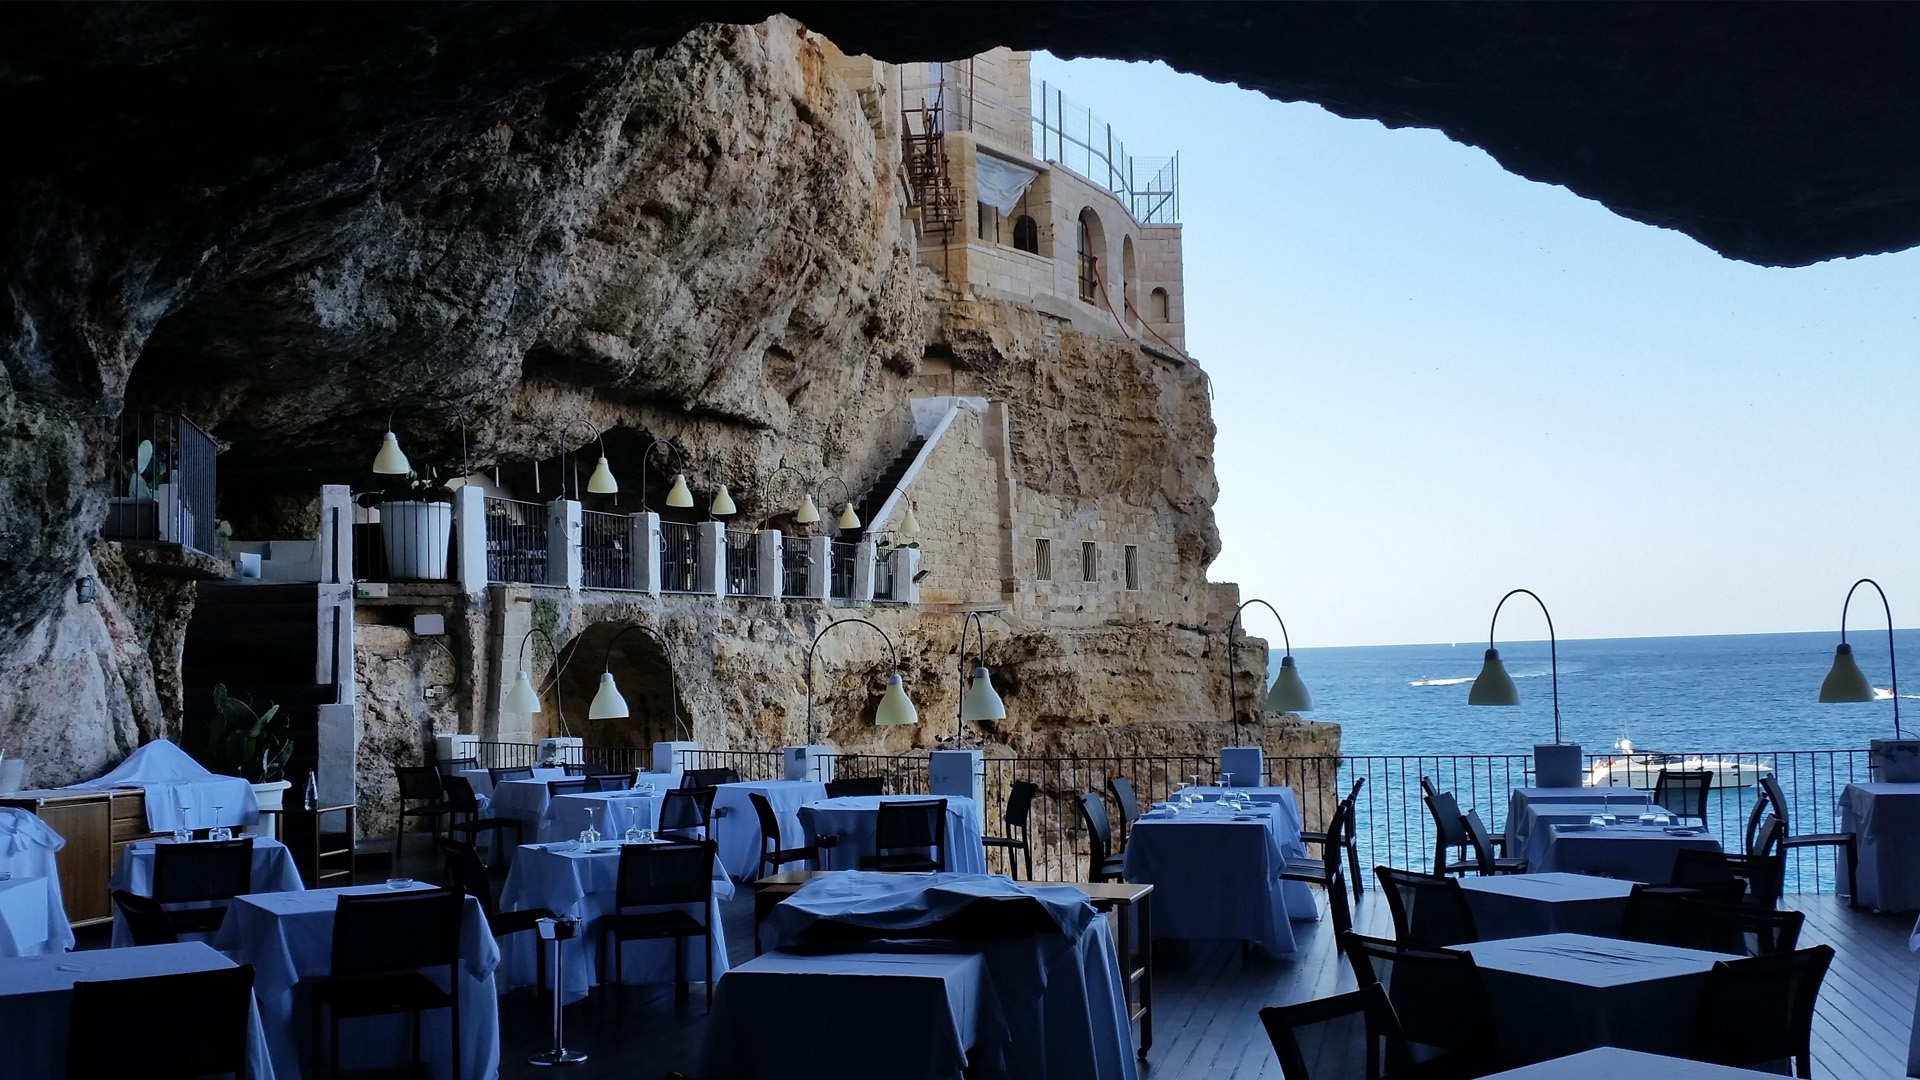 Grotta Palazzese in Polignano a Mare, Italy